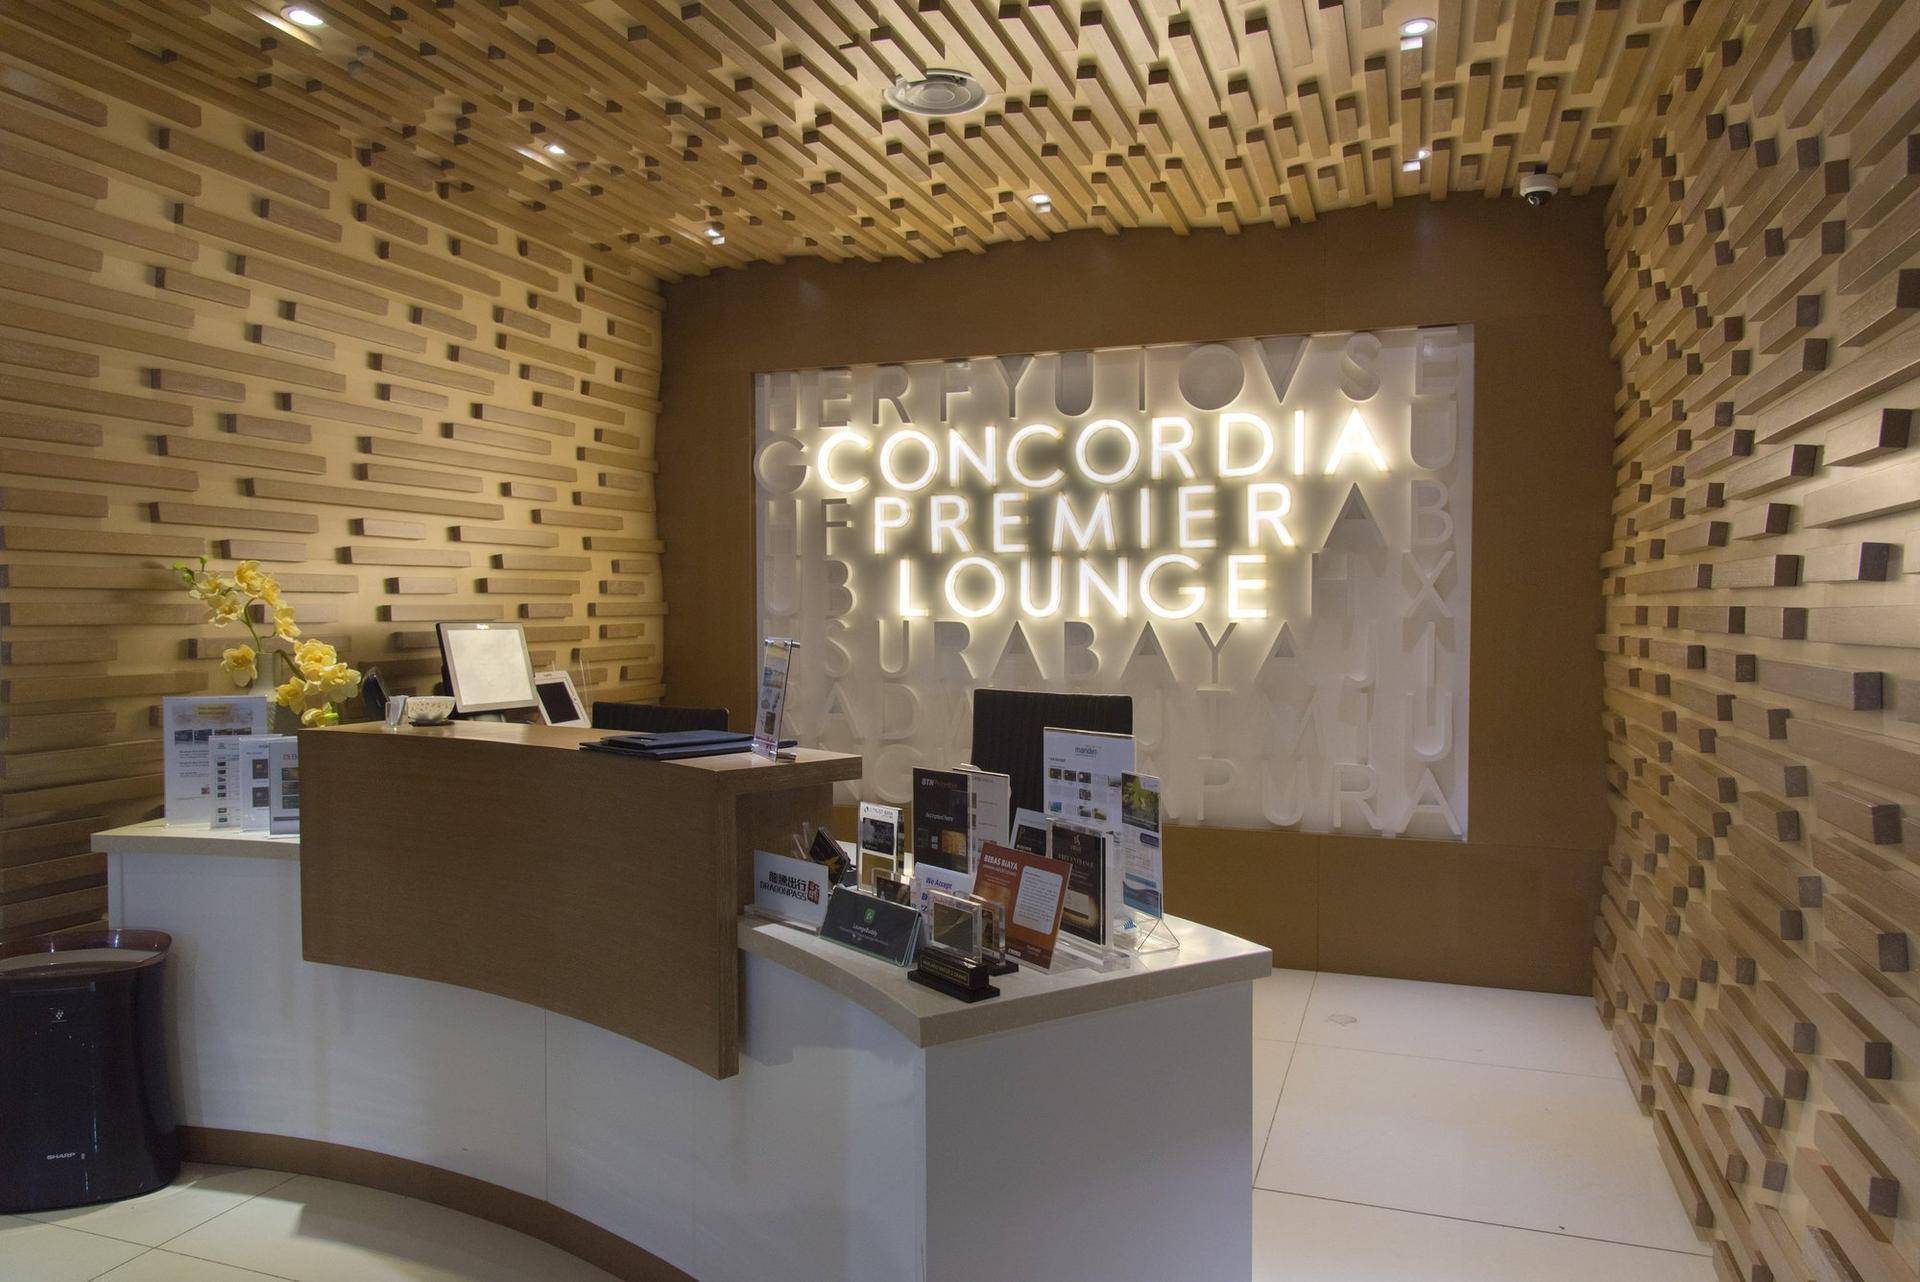 Concordia Premier Lounge image 81 of 81